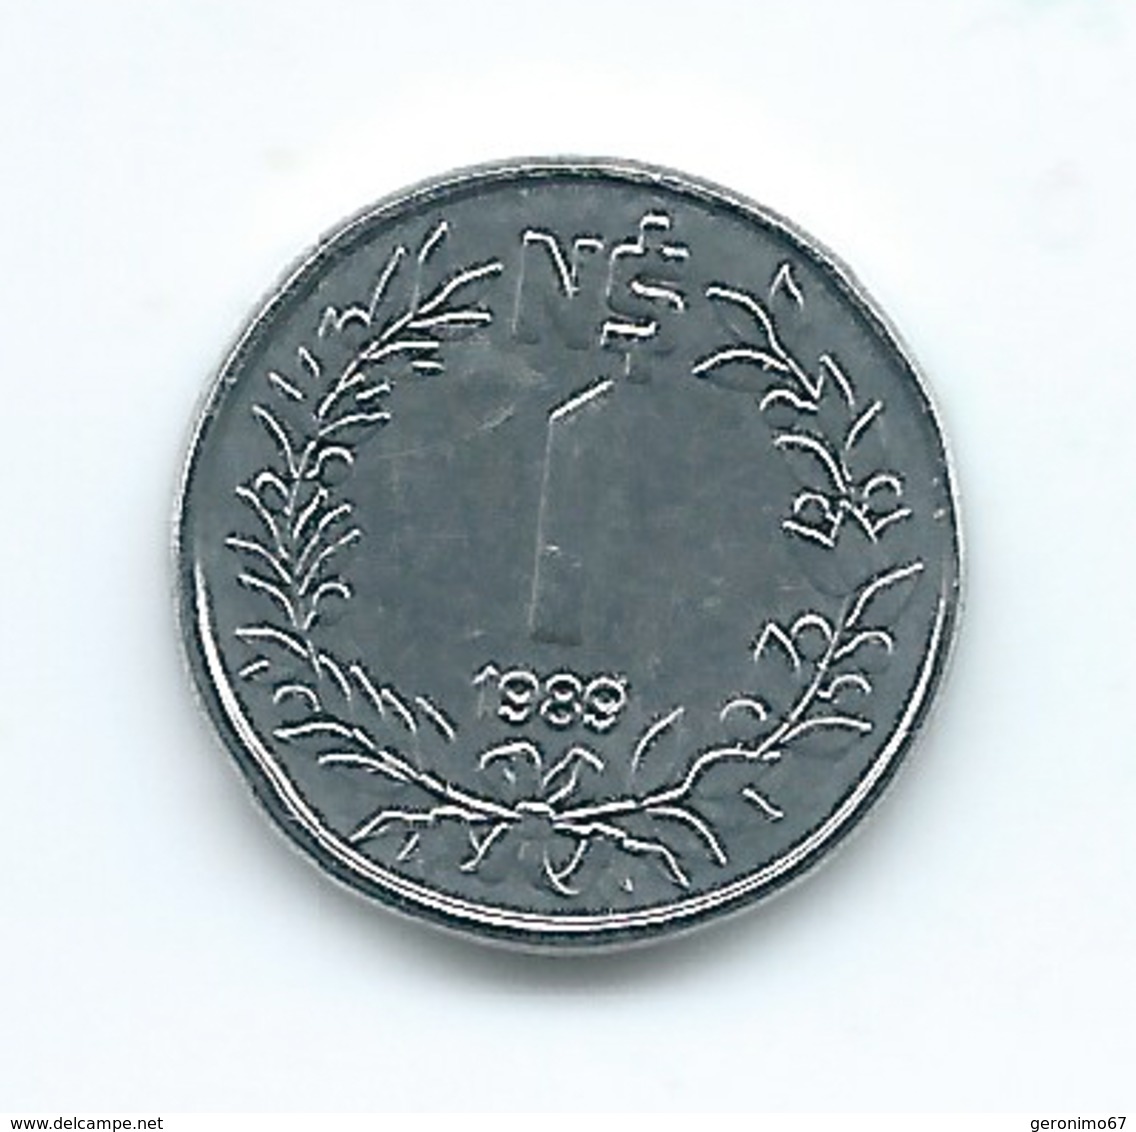 Uruguay - 1989 - 1 New Peso - KM95 - Tiny Coin - UNC - Uruguay